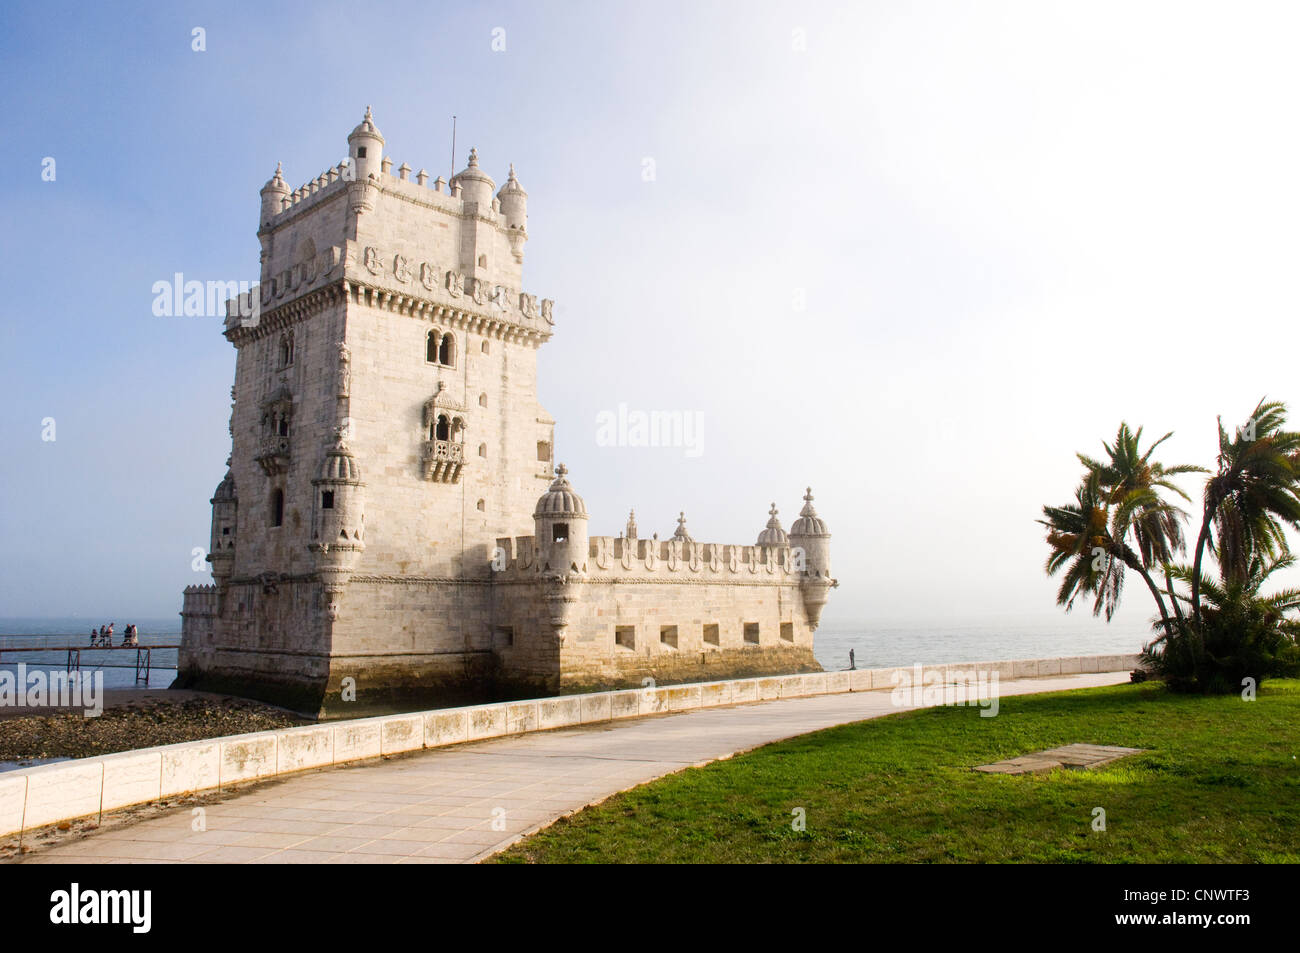 La Torre di Belem in Belem, Lisbona, Portogallo Foto Stock